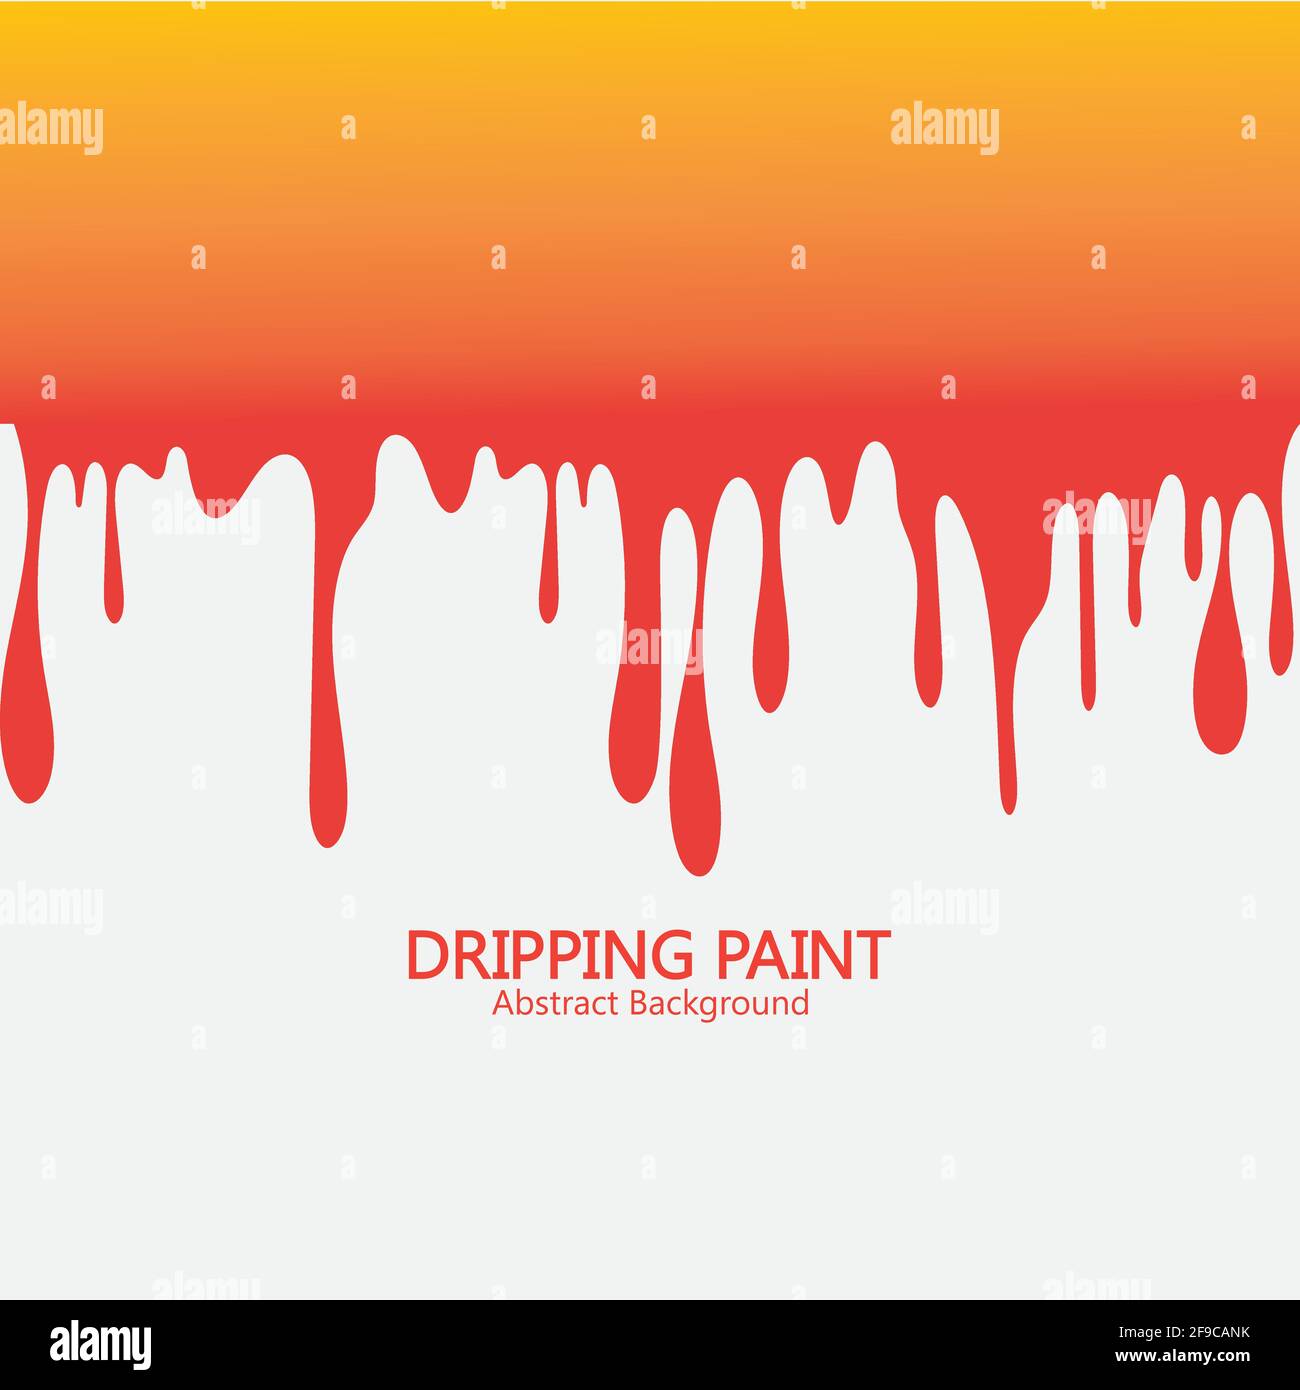 Lv Dripping Logo Paint Splatter Art Print